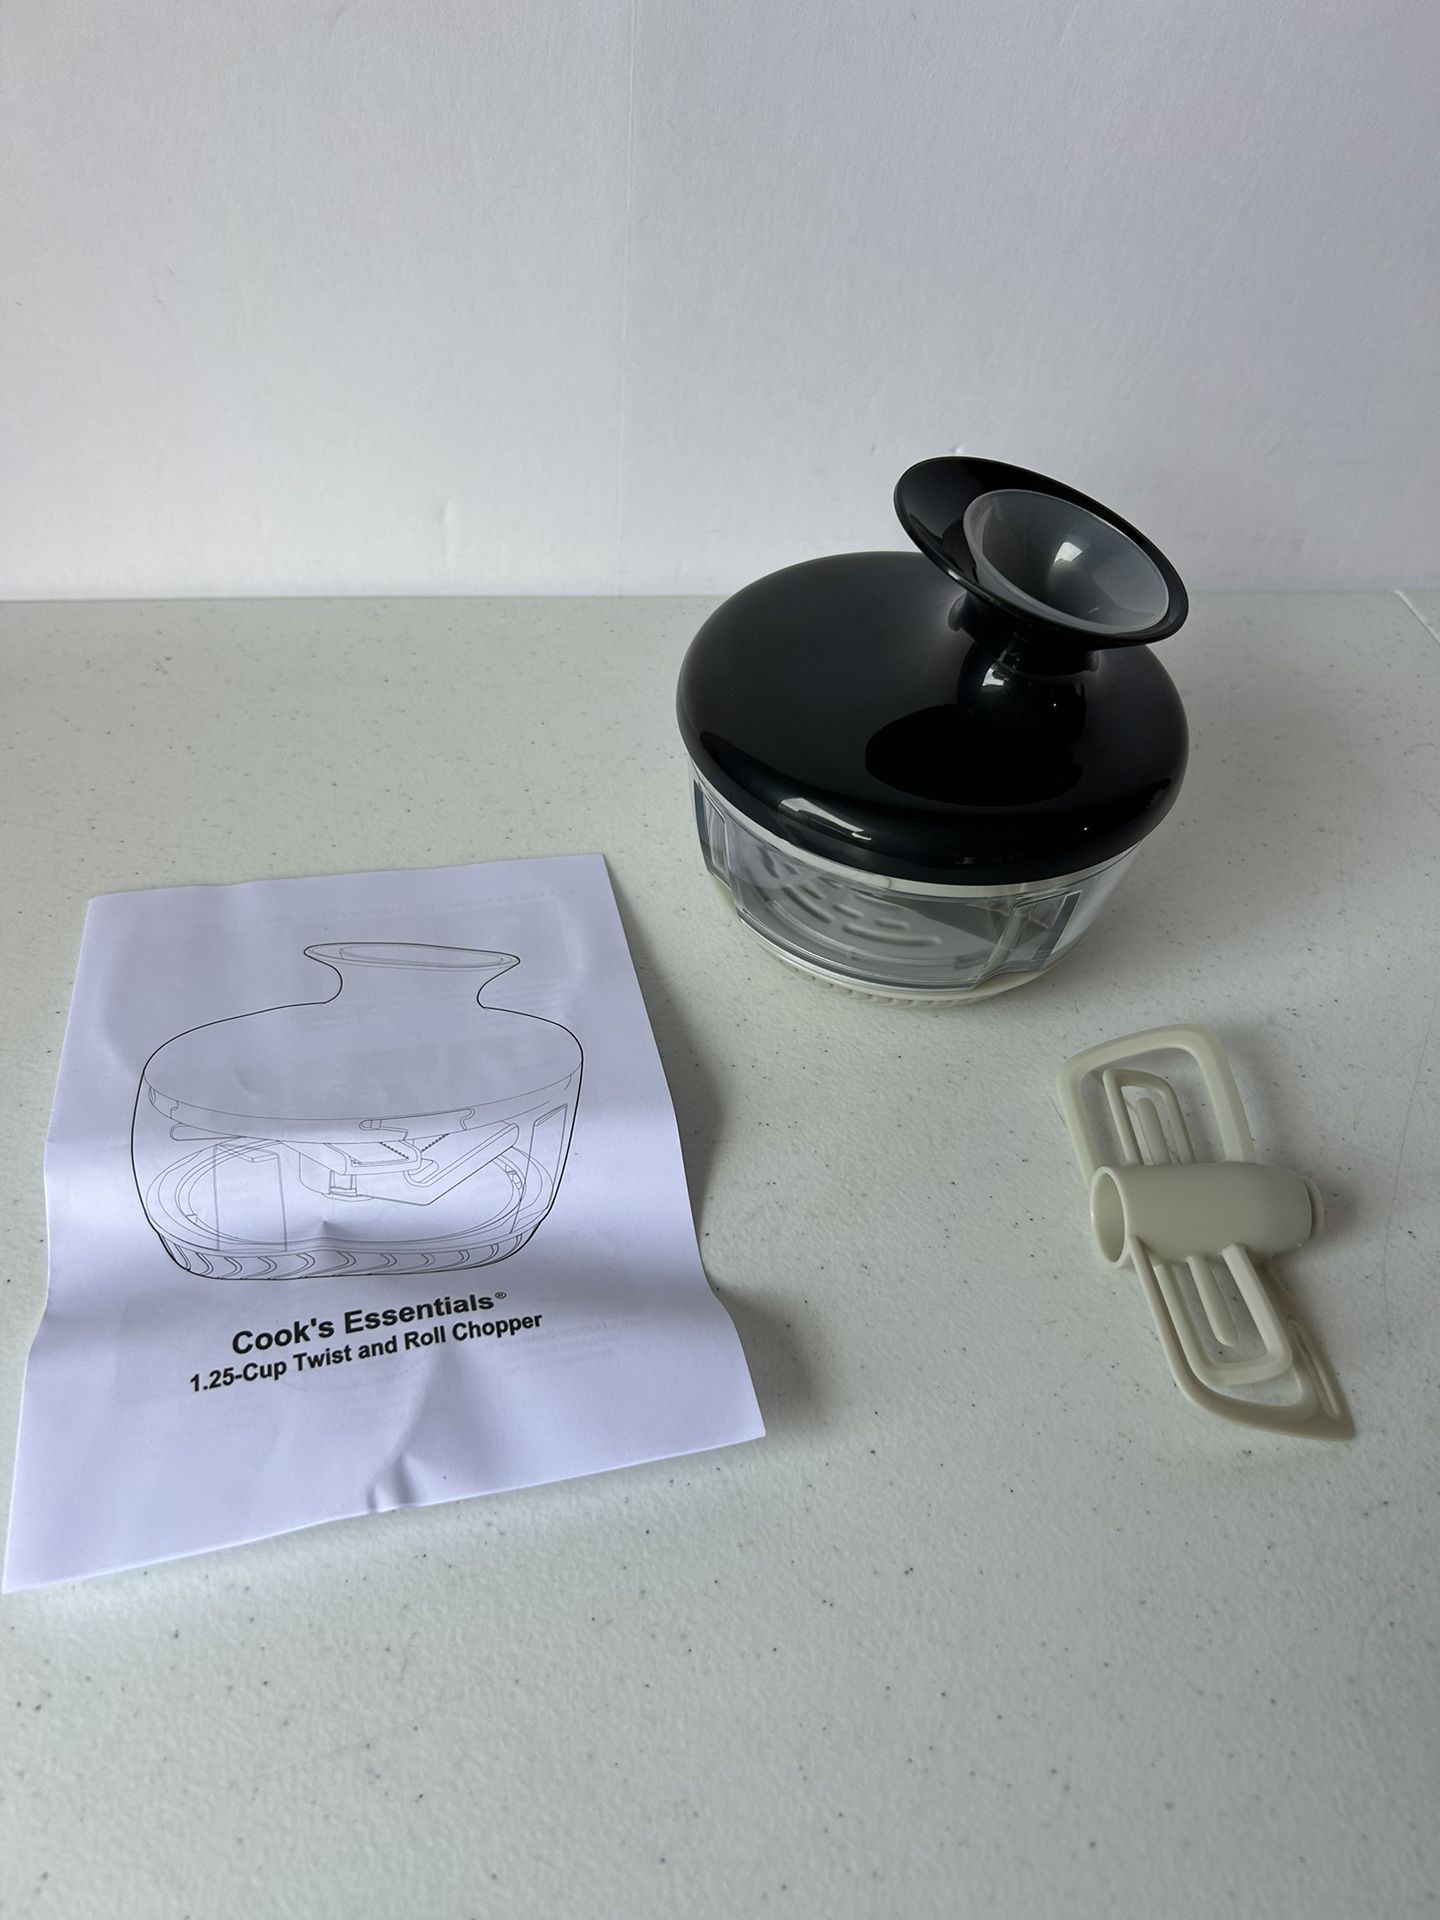 Cook's Essentials Rolling Food Chopper Manual Hand, Shaker, Mixer, Cutter  #3948